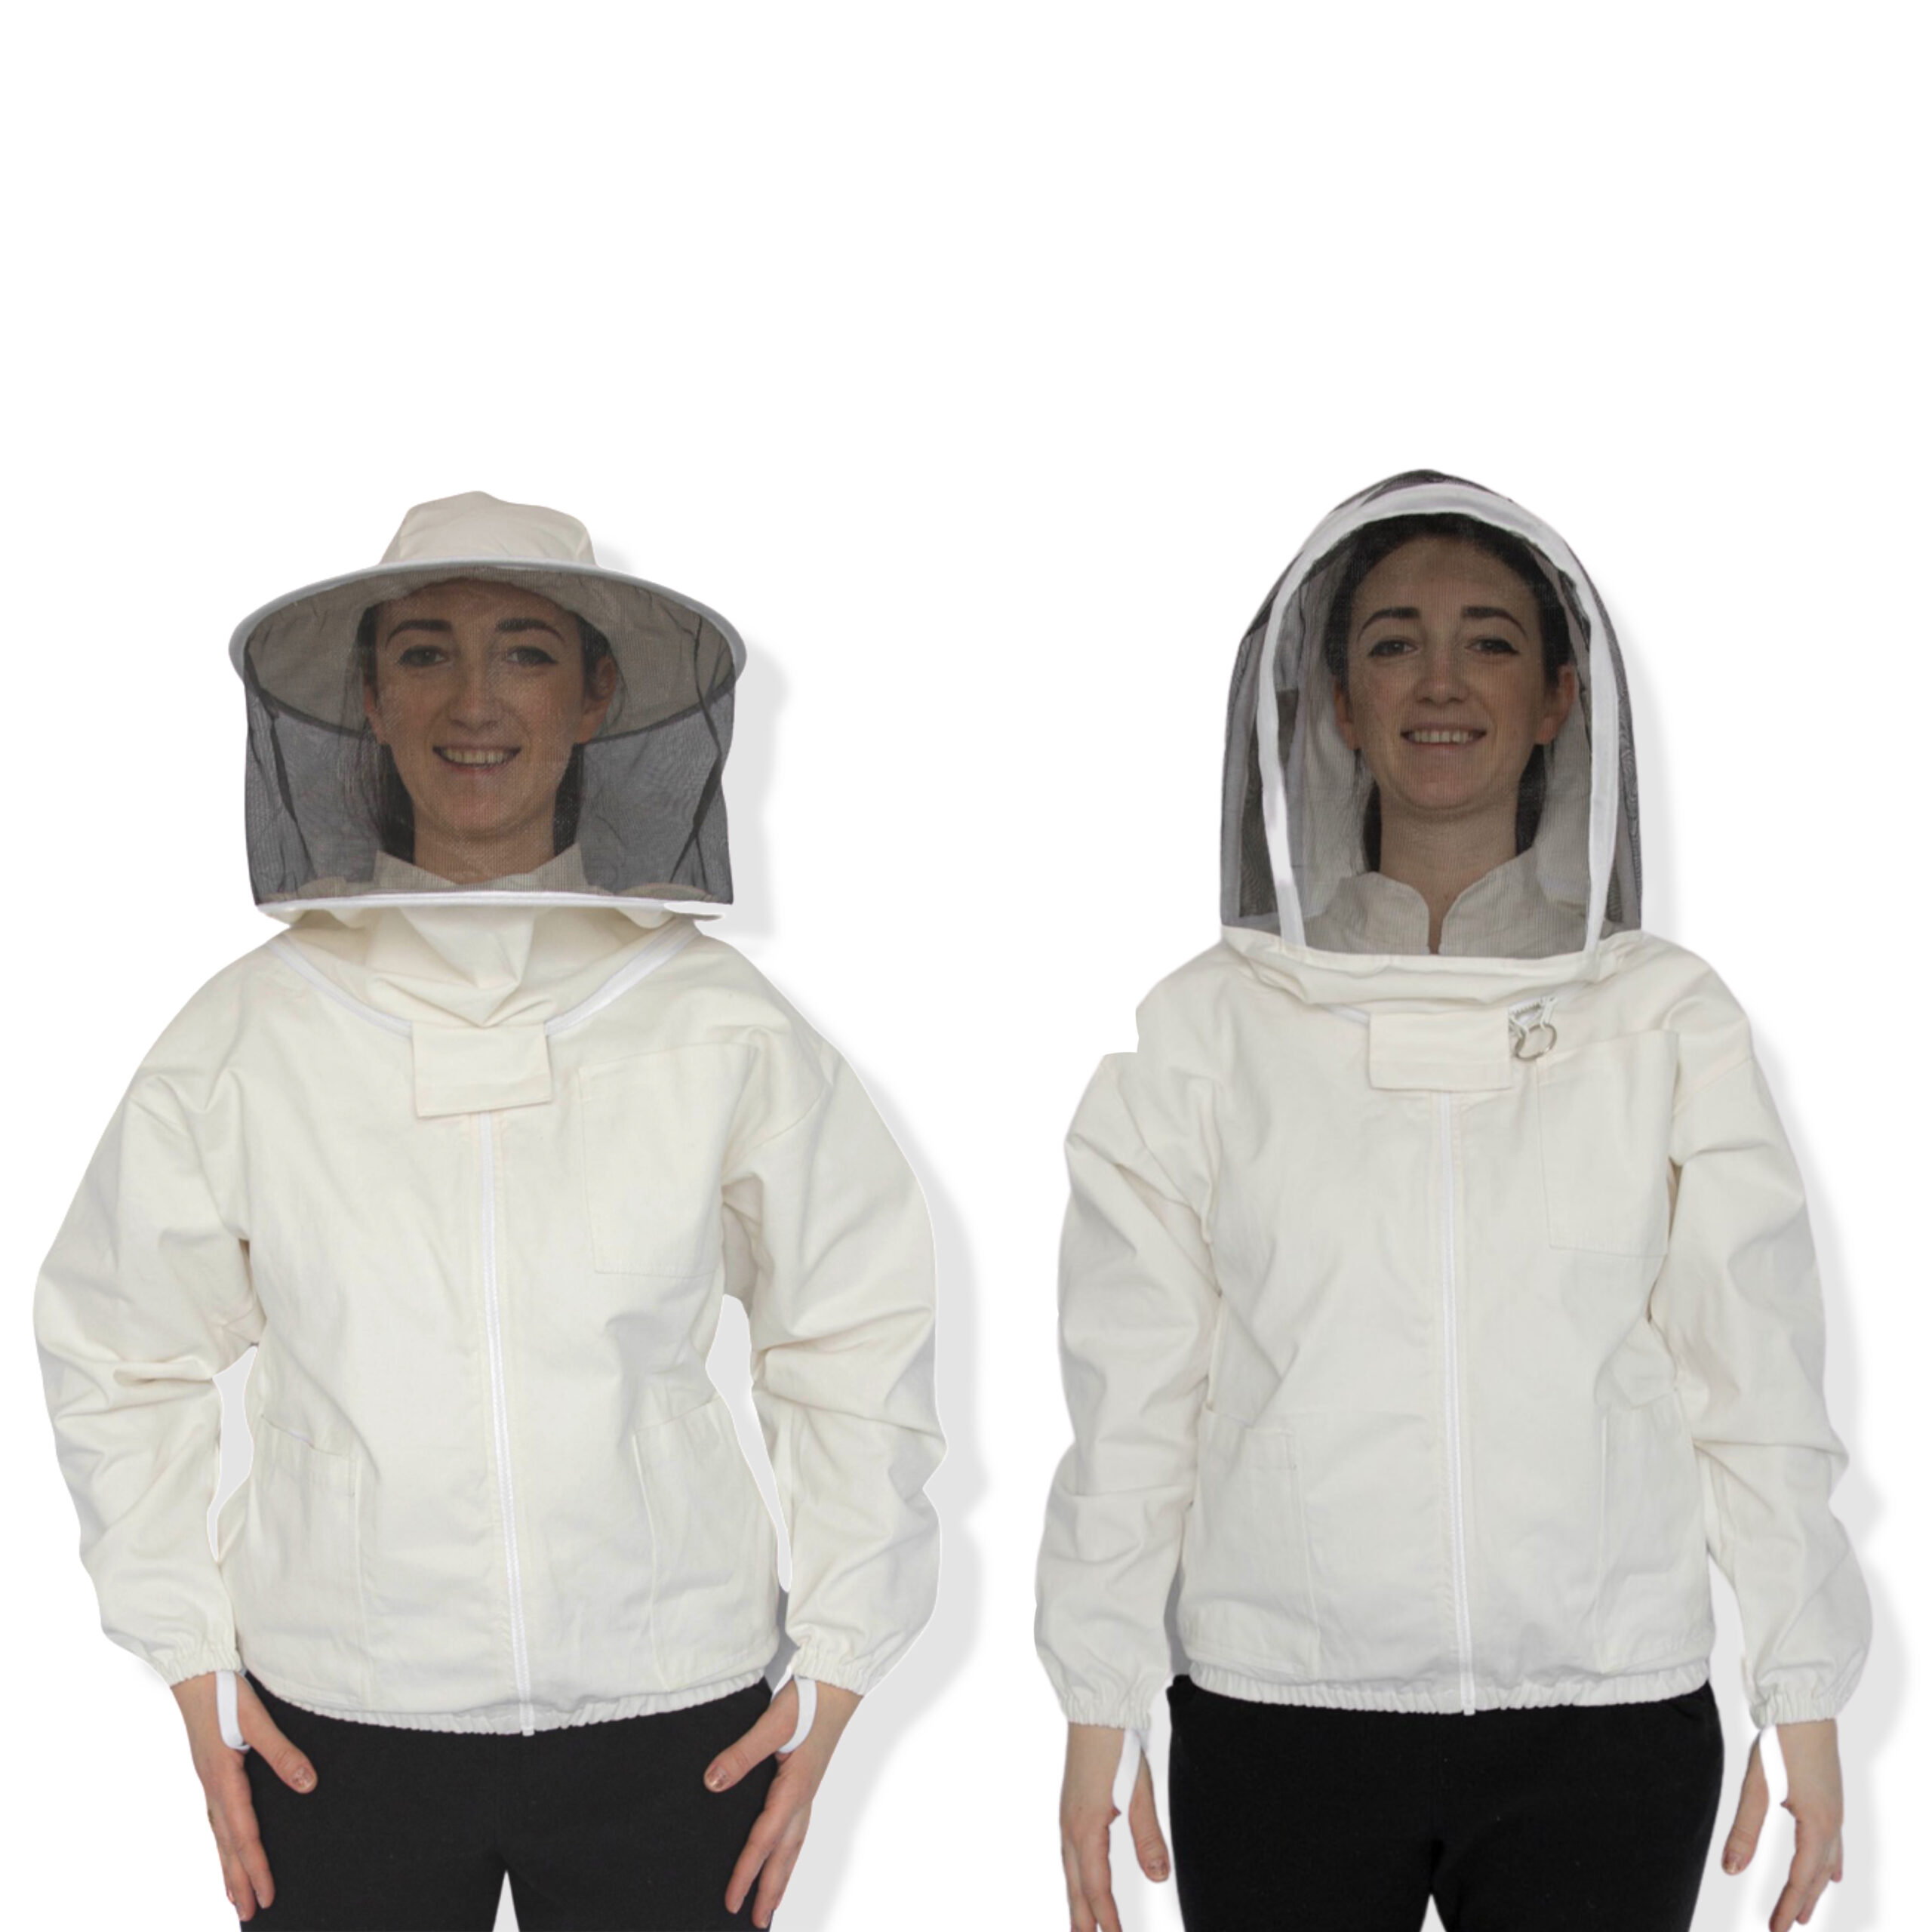 POLLIBEE Bee Jacket Beekeeping Jacket with Removable Round Hat Bee Jacket with Veil